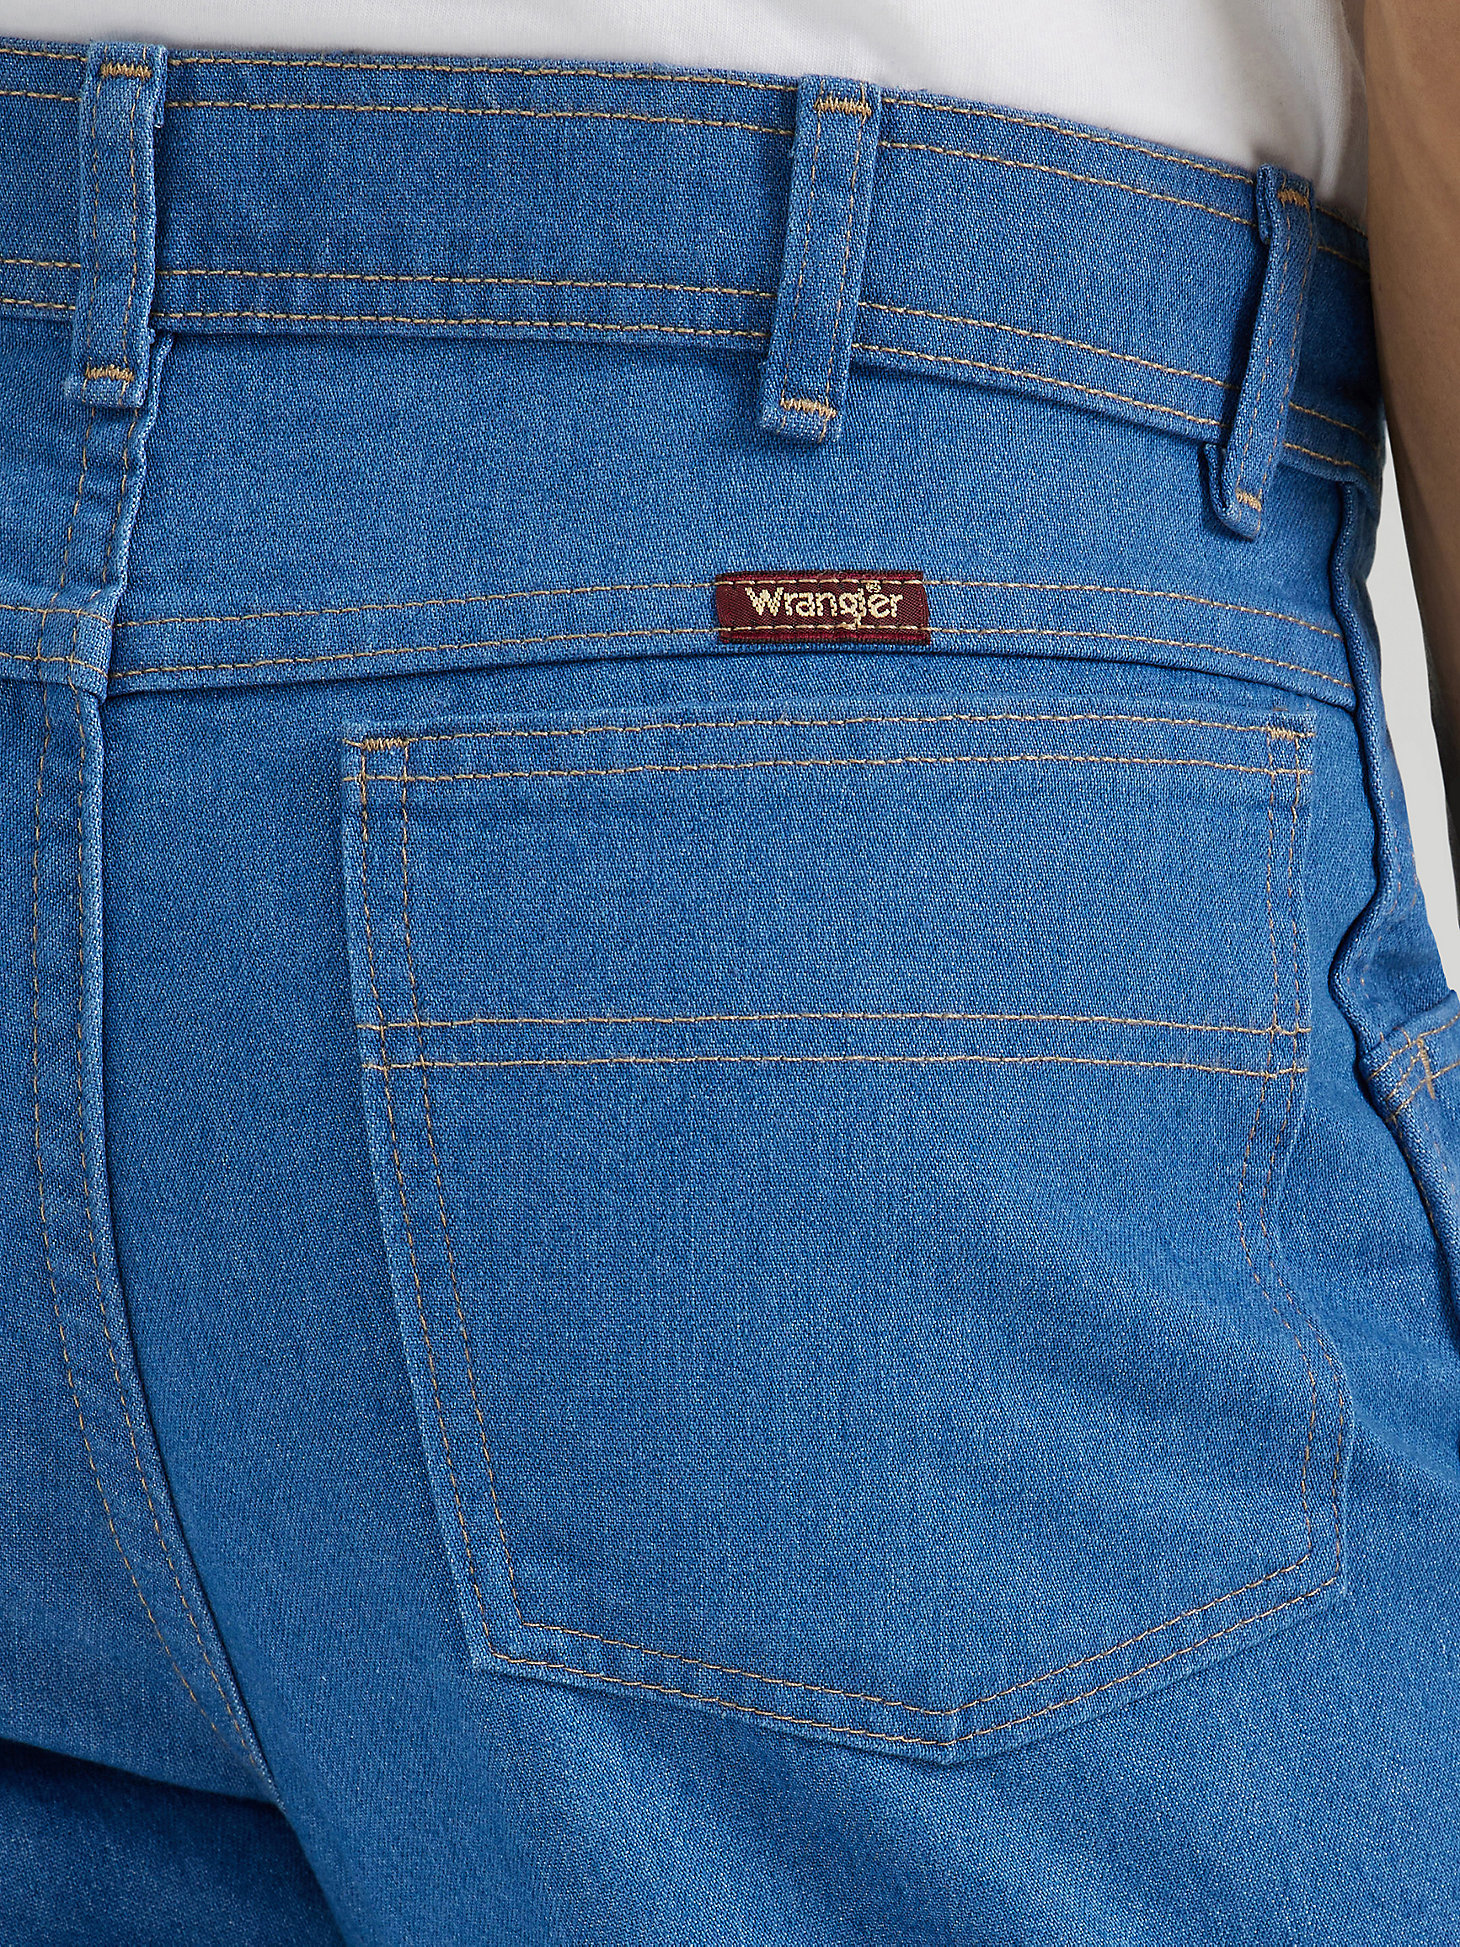 Wrangler® Men's Five Star Premium Regular Flex Fit Jean in Light Blue alternative view 2